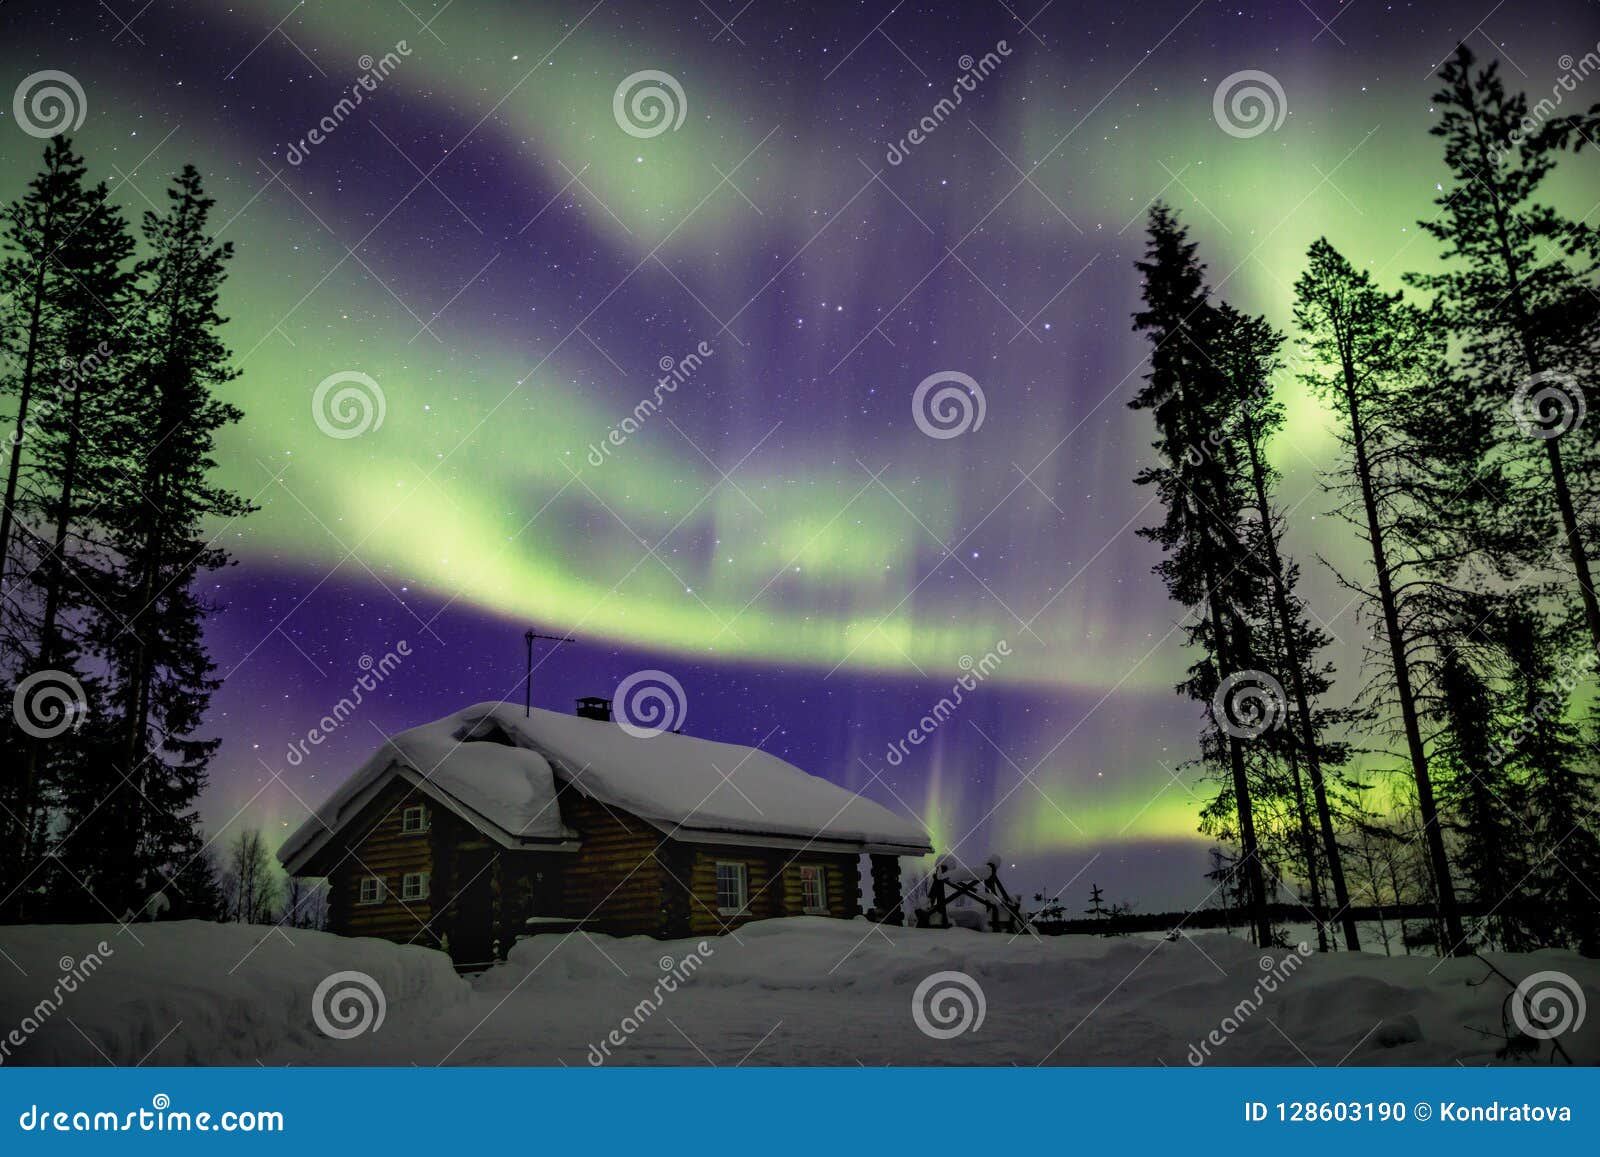 beautiful northern lights aurora borealis in the night sky over winter lapland landscape, finland, scandinavia